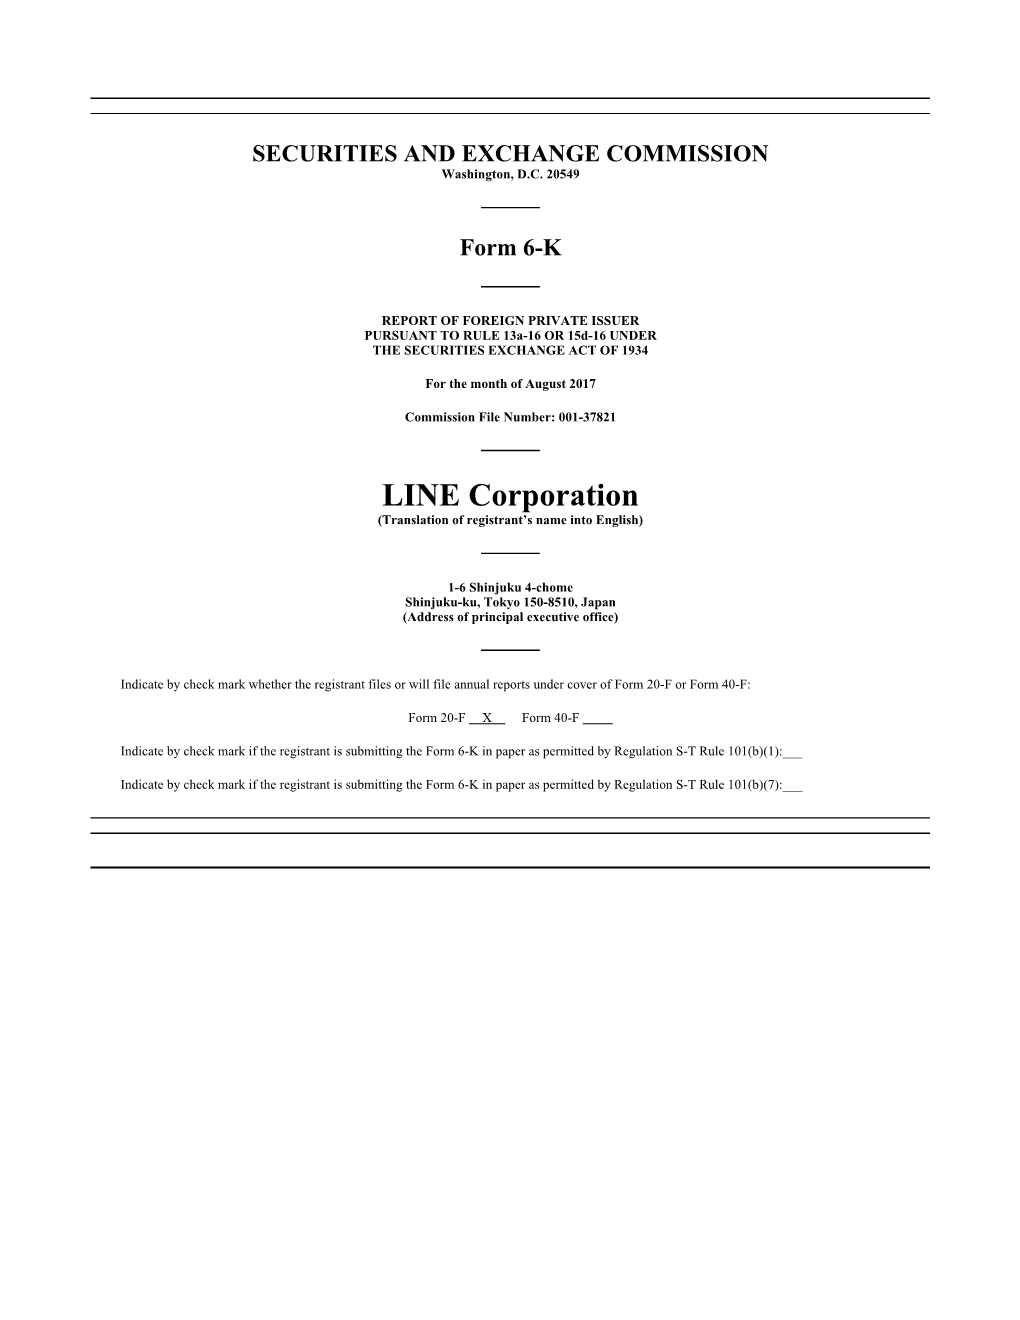 LINE Corporation (Translation of Registrant’S Name Into English)